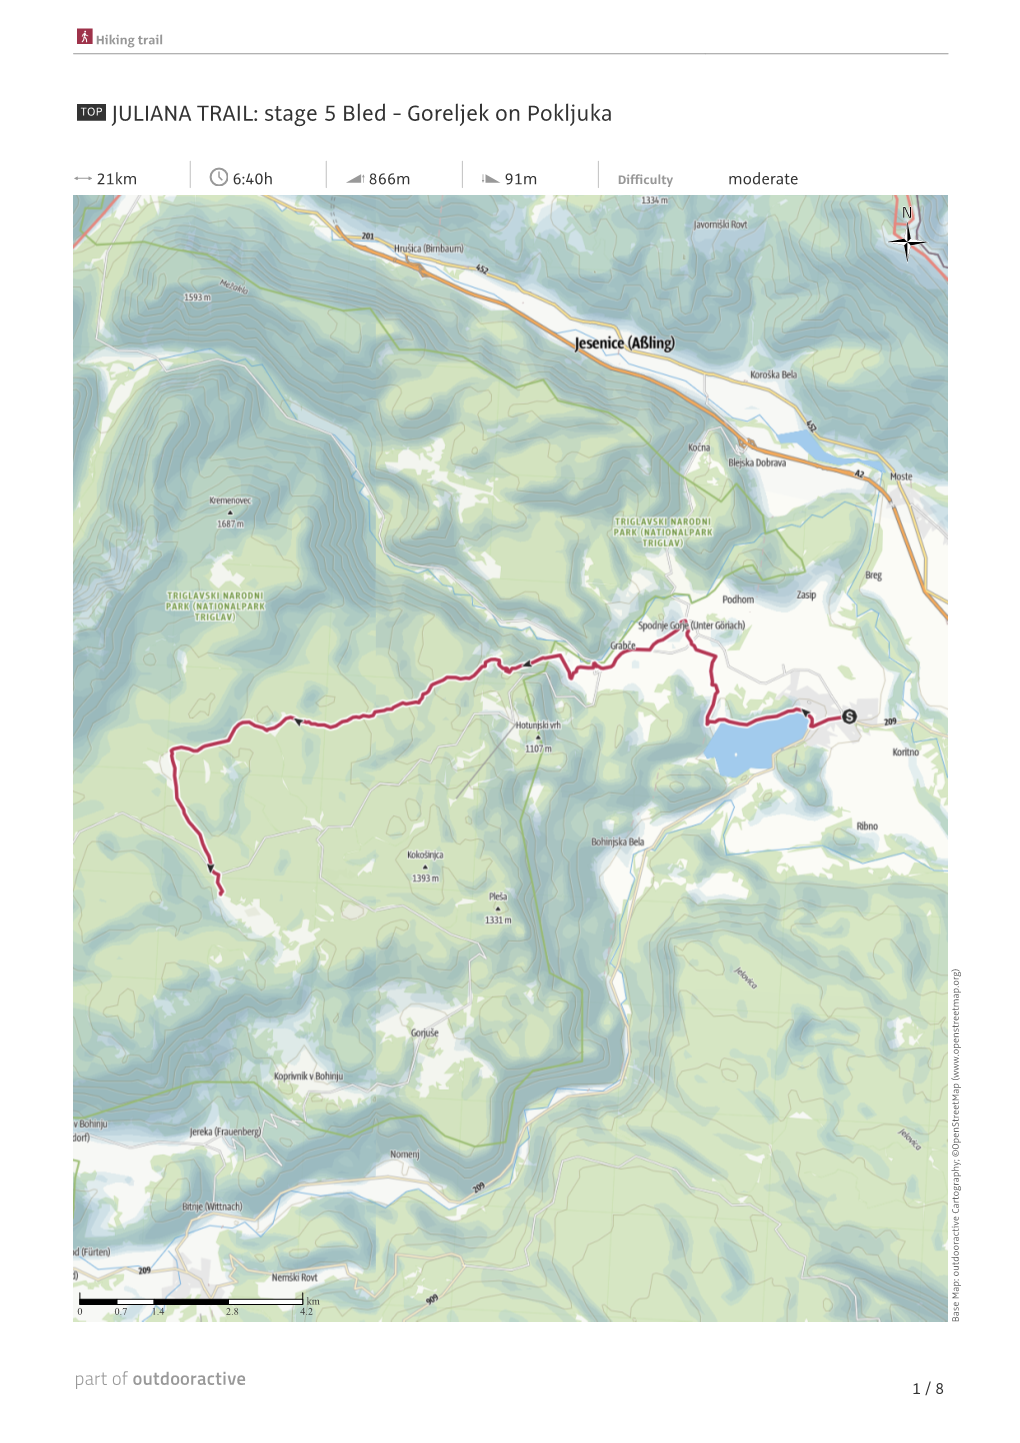 JULIANA TRAIL: Stage 5 Bled - Goreljek on Pokljuka